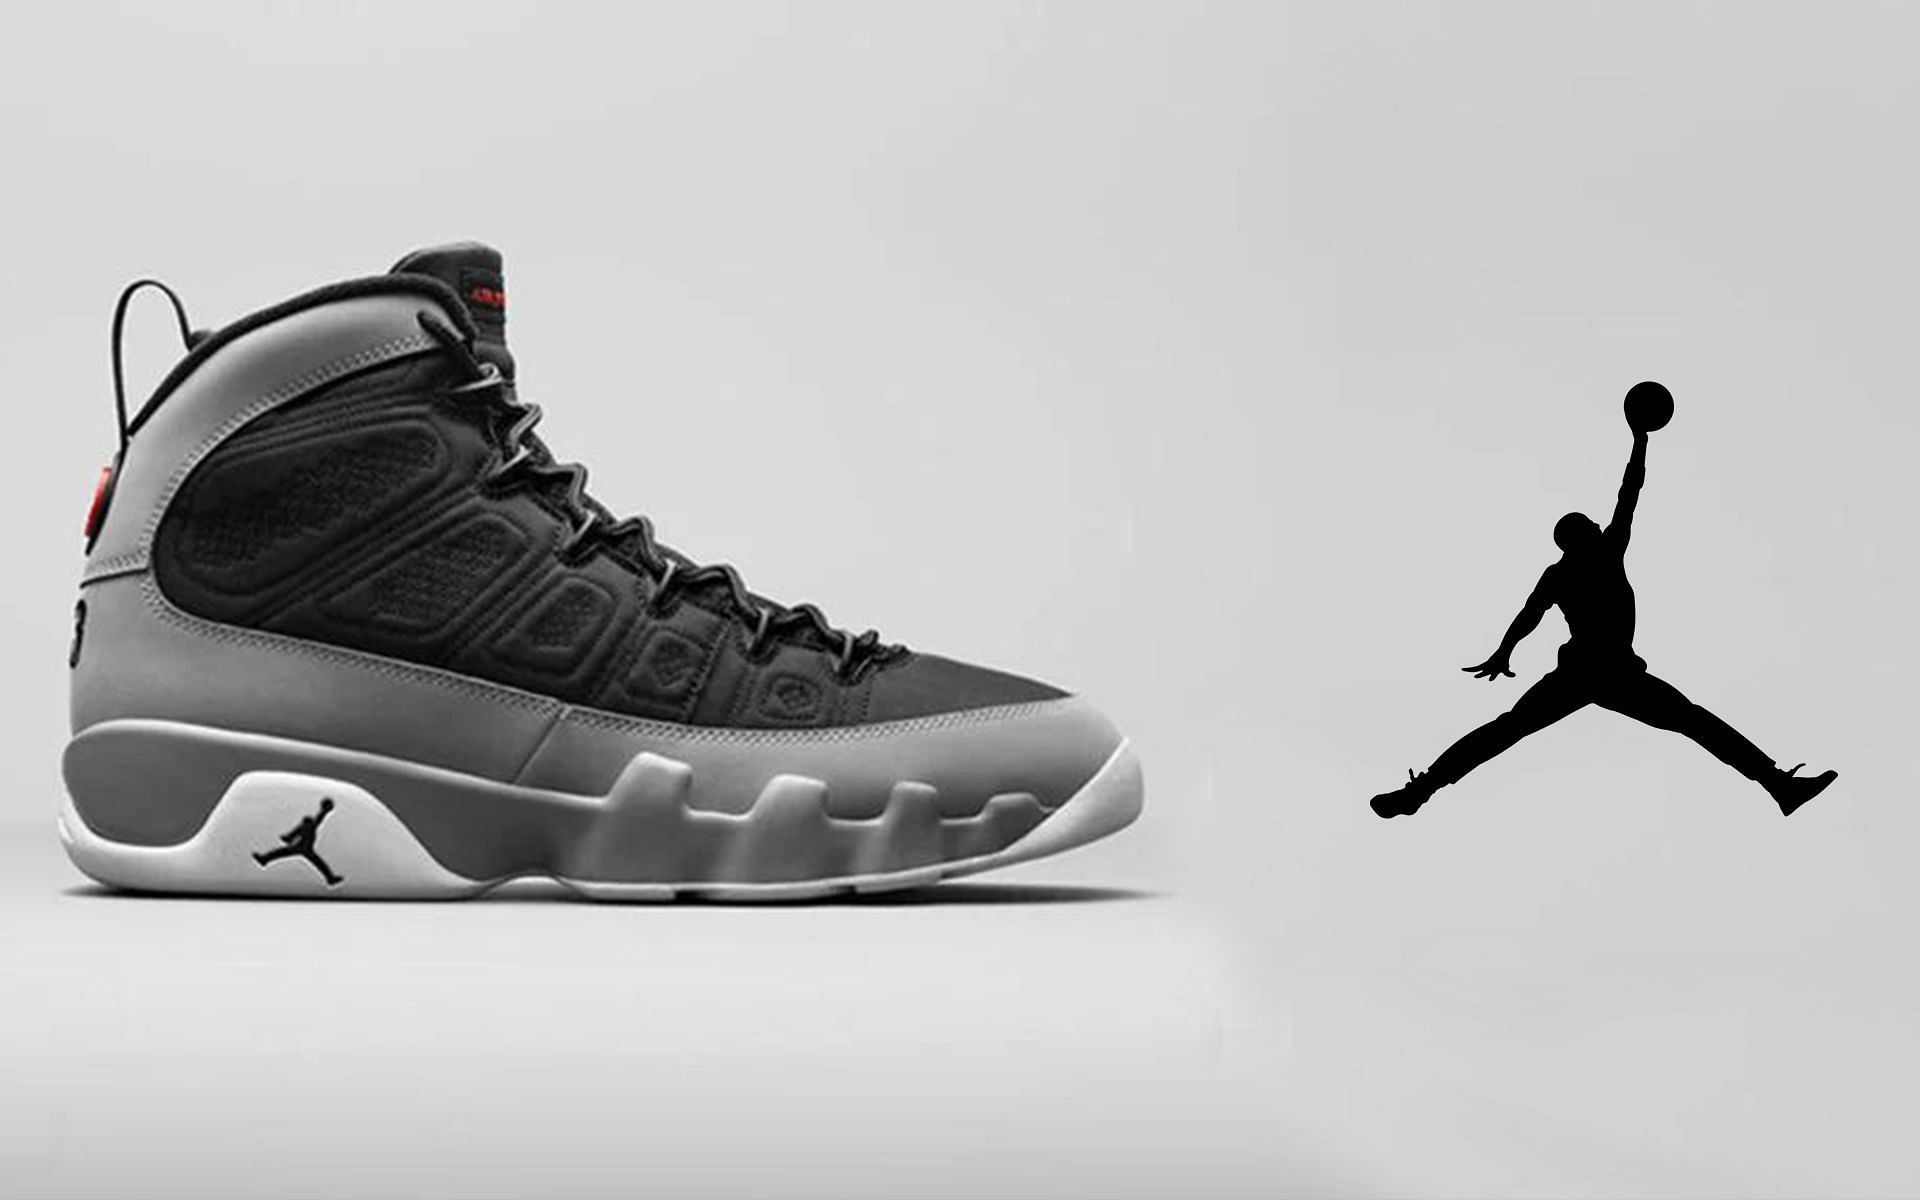 Air Jordan 9 Particle Grey shoe (Image via Sportskeeda)